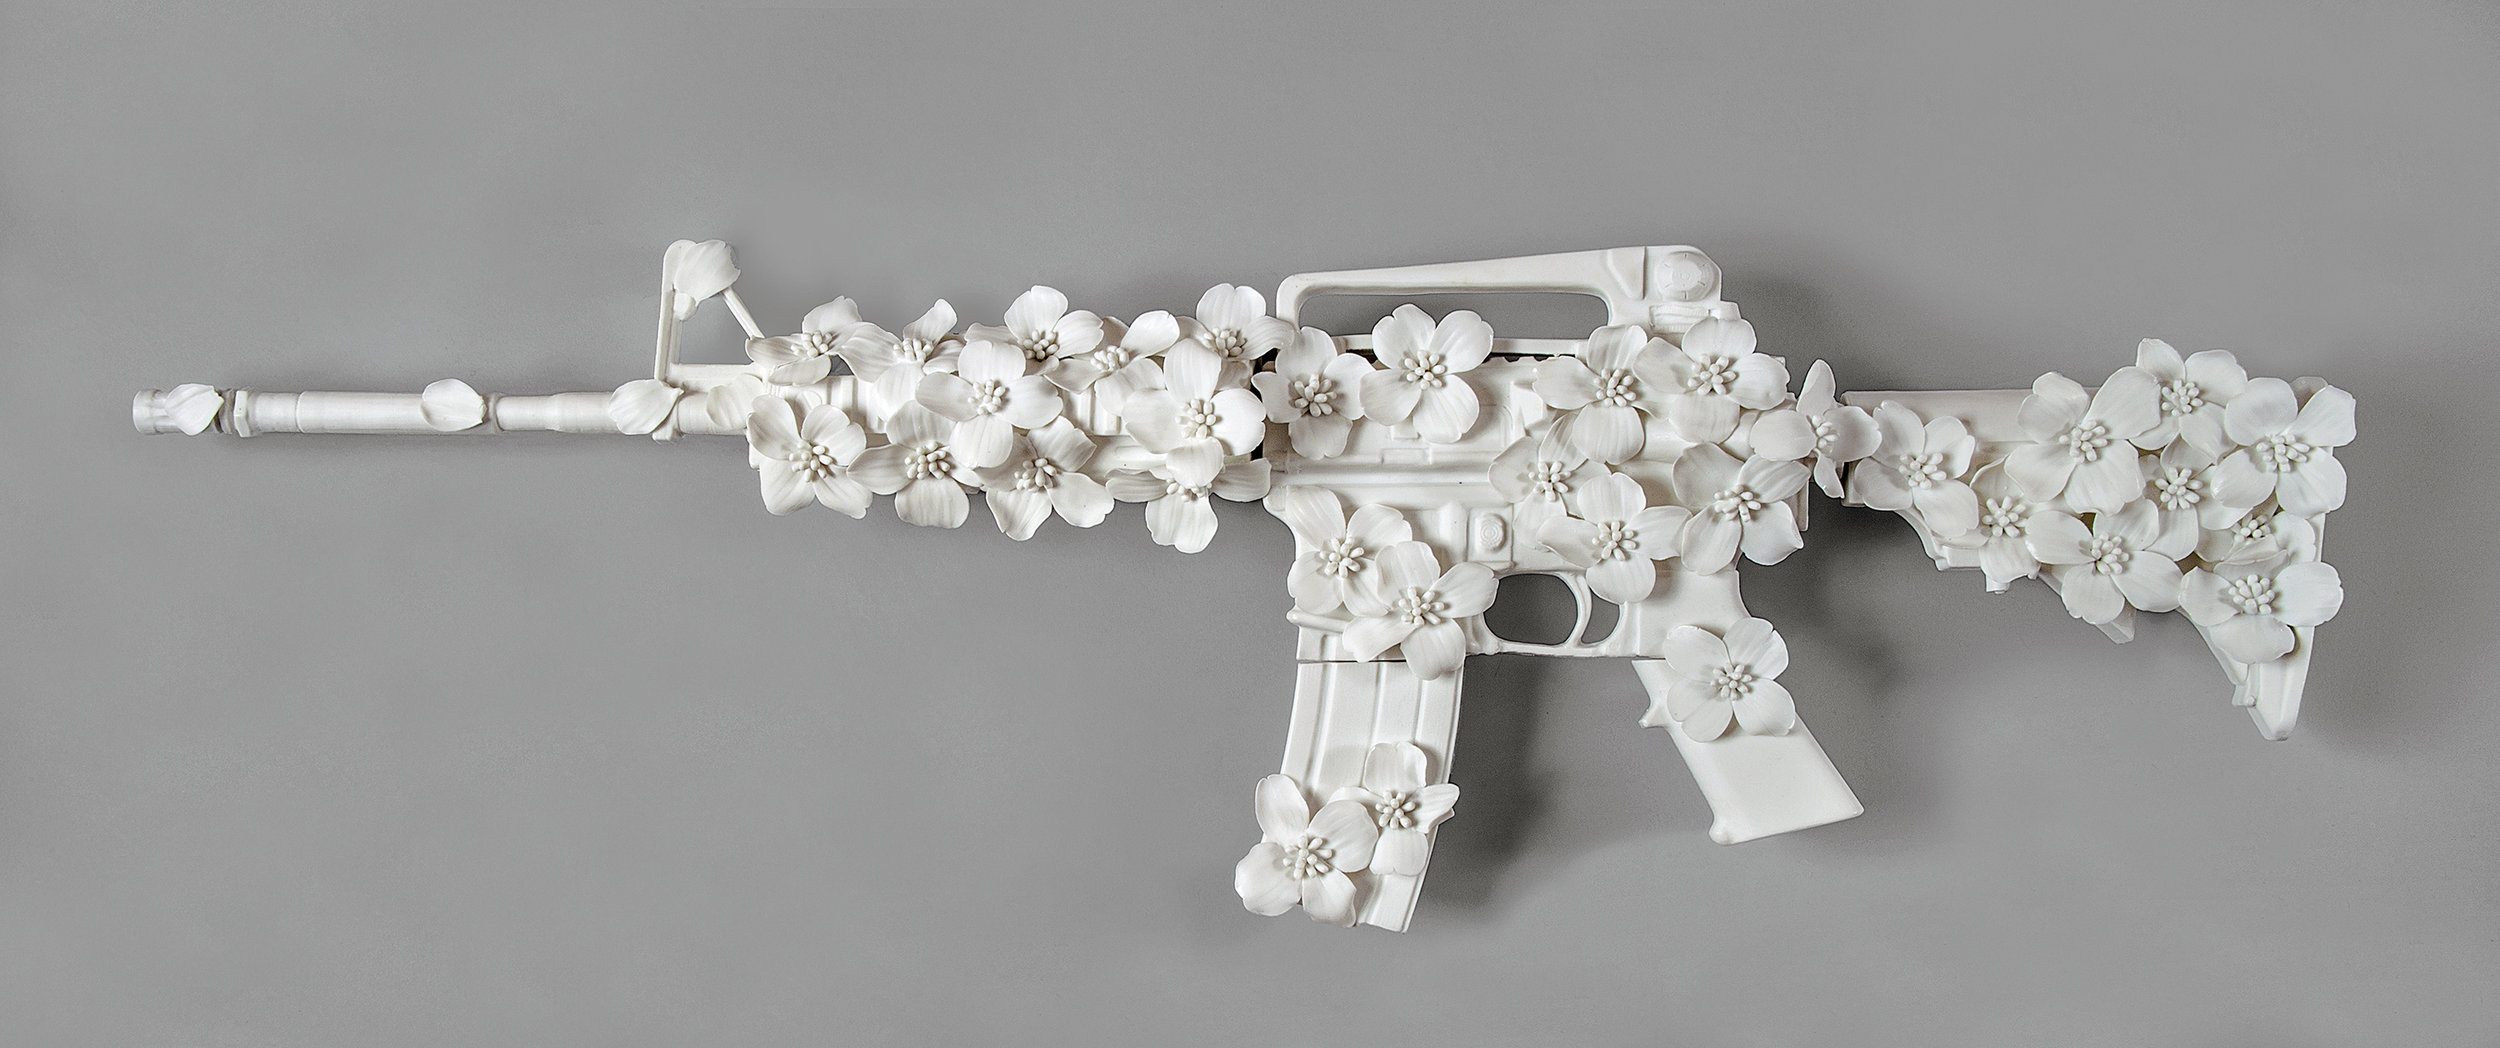 Keiko Fukazawa   AKA AR-15-0416200732 (Blacksburg, Virginia),  from the Peacemaker series, 2018  Porcelain, Plexiglass Case  39”W x 15”D x 6”H 